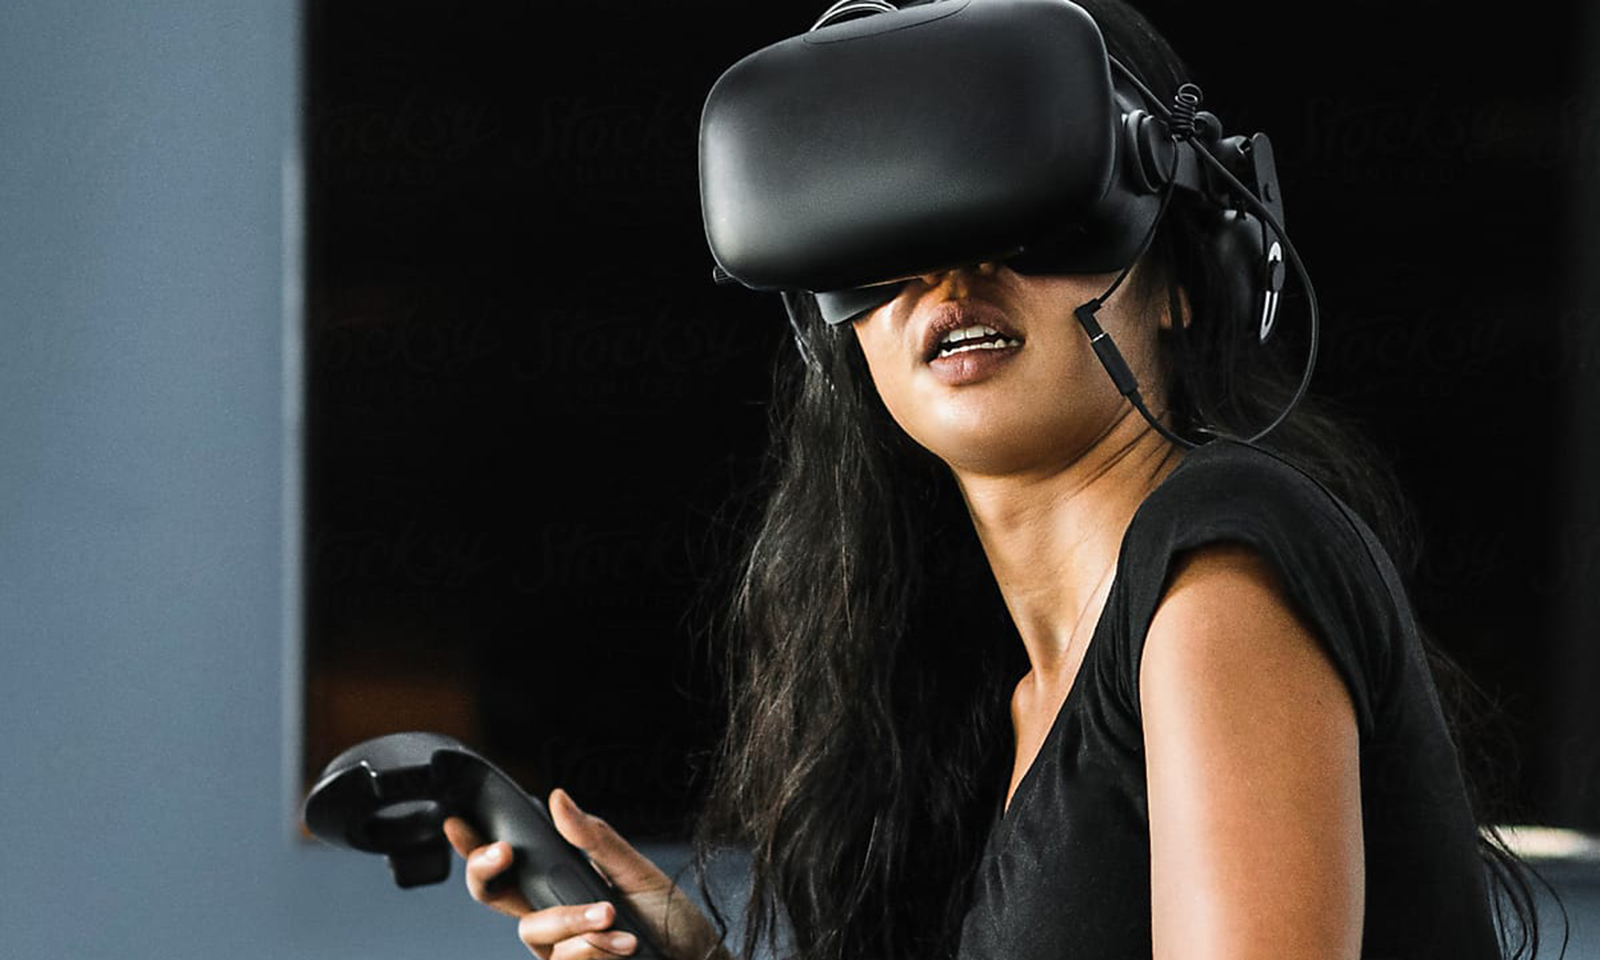 VR experience opens at Irvine Spectrum Center